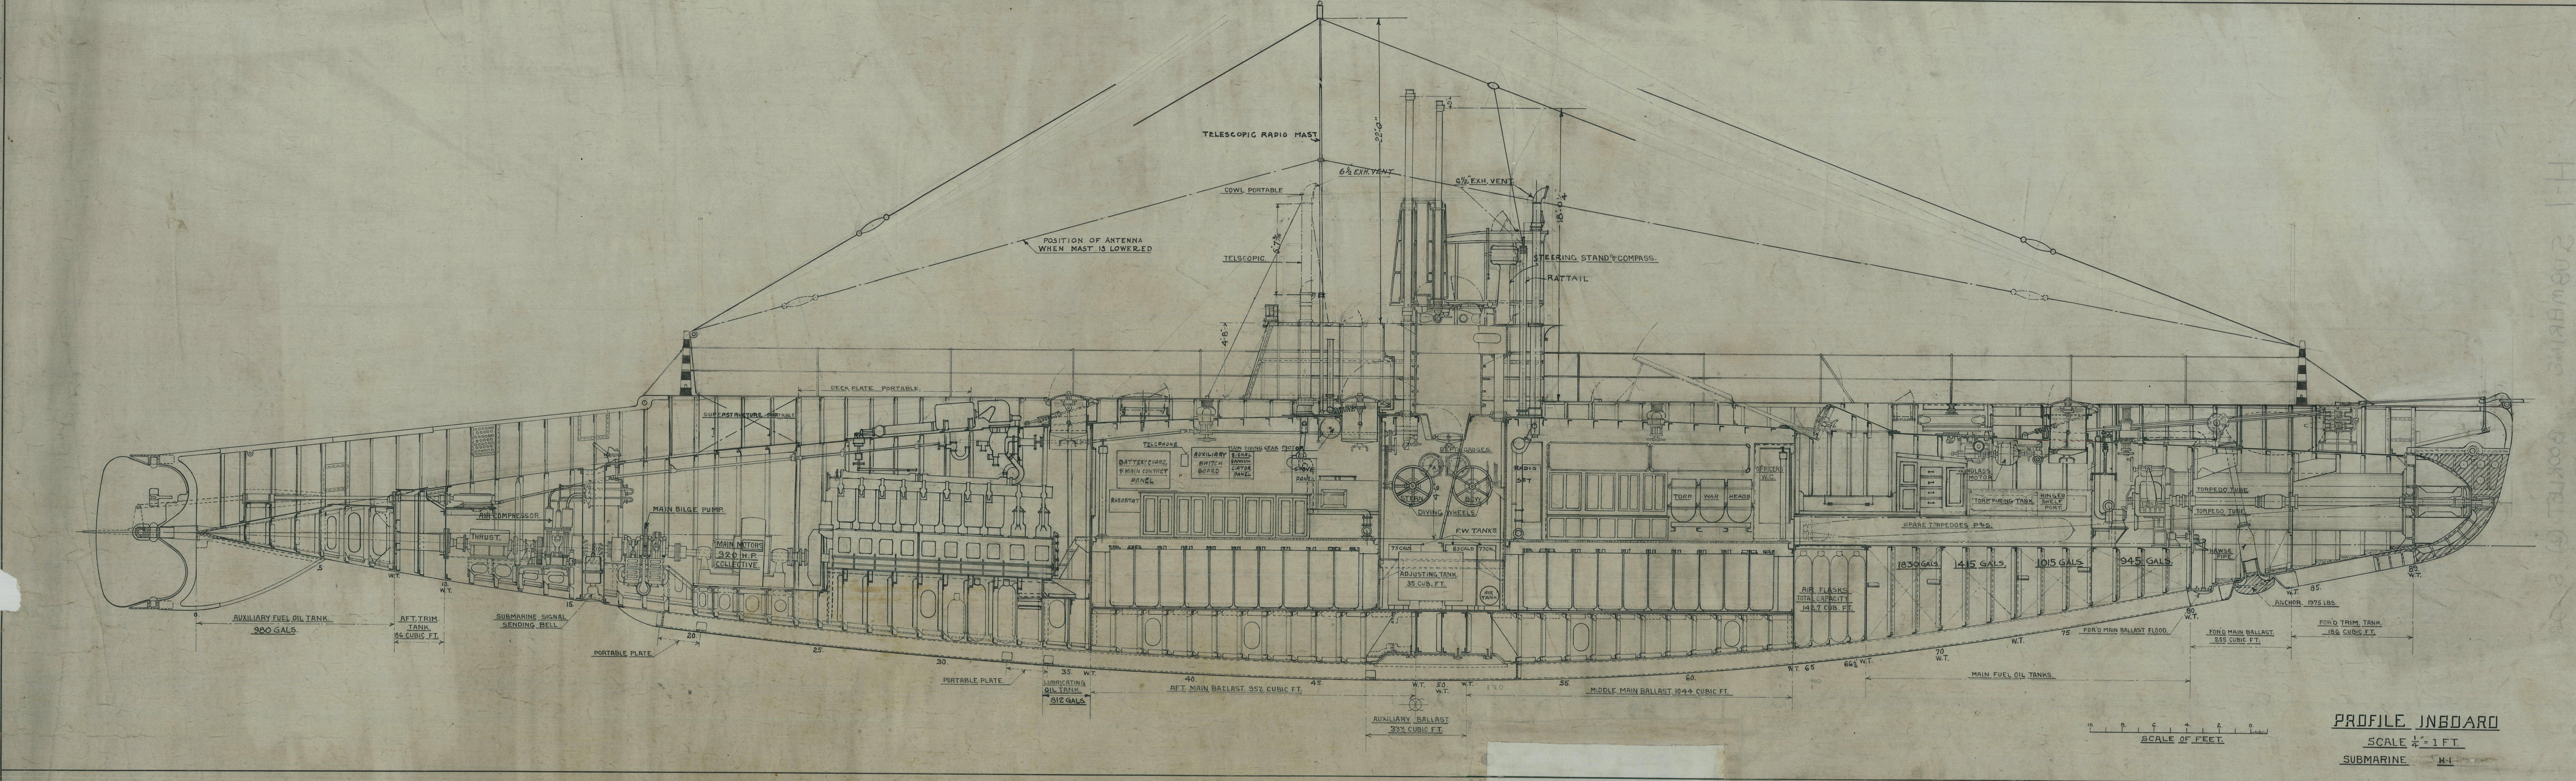 Philadelphia Navy Yard plans via Internet Archive